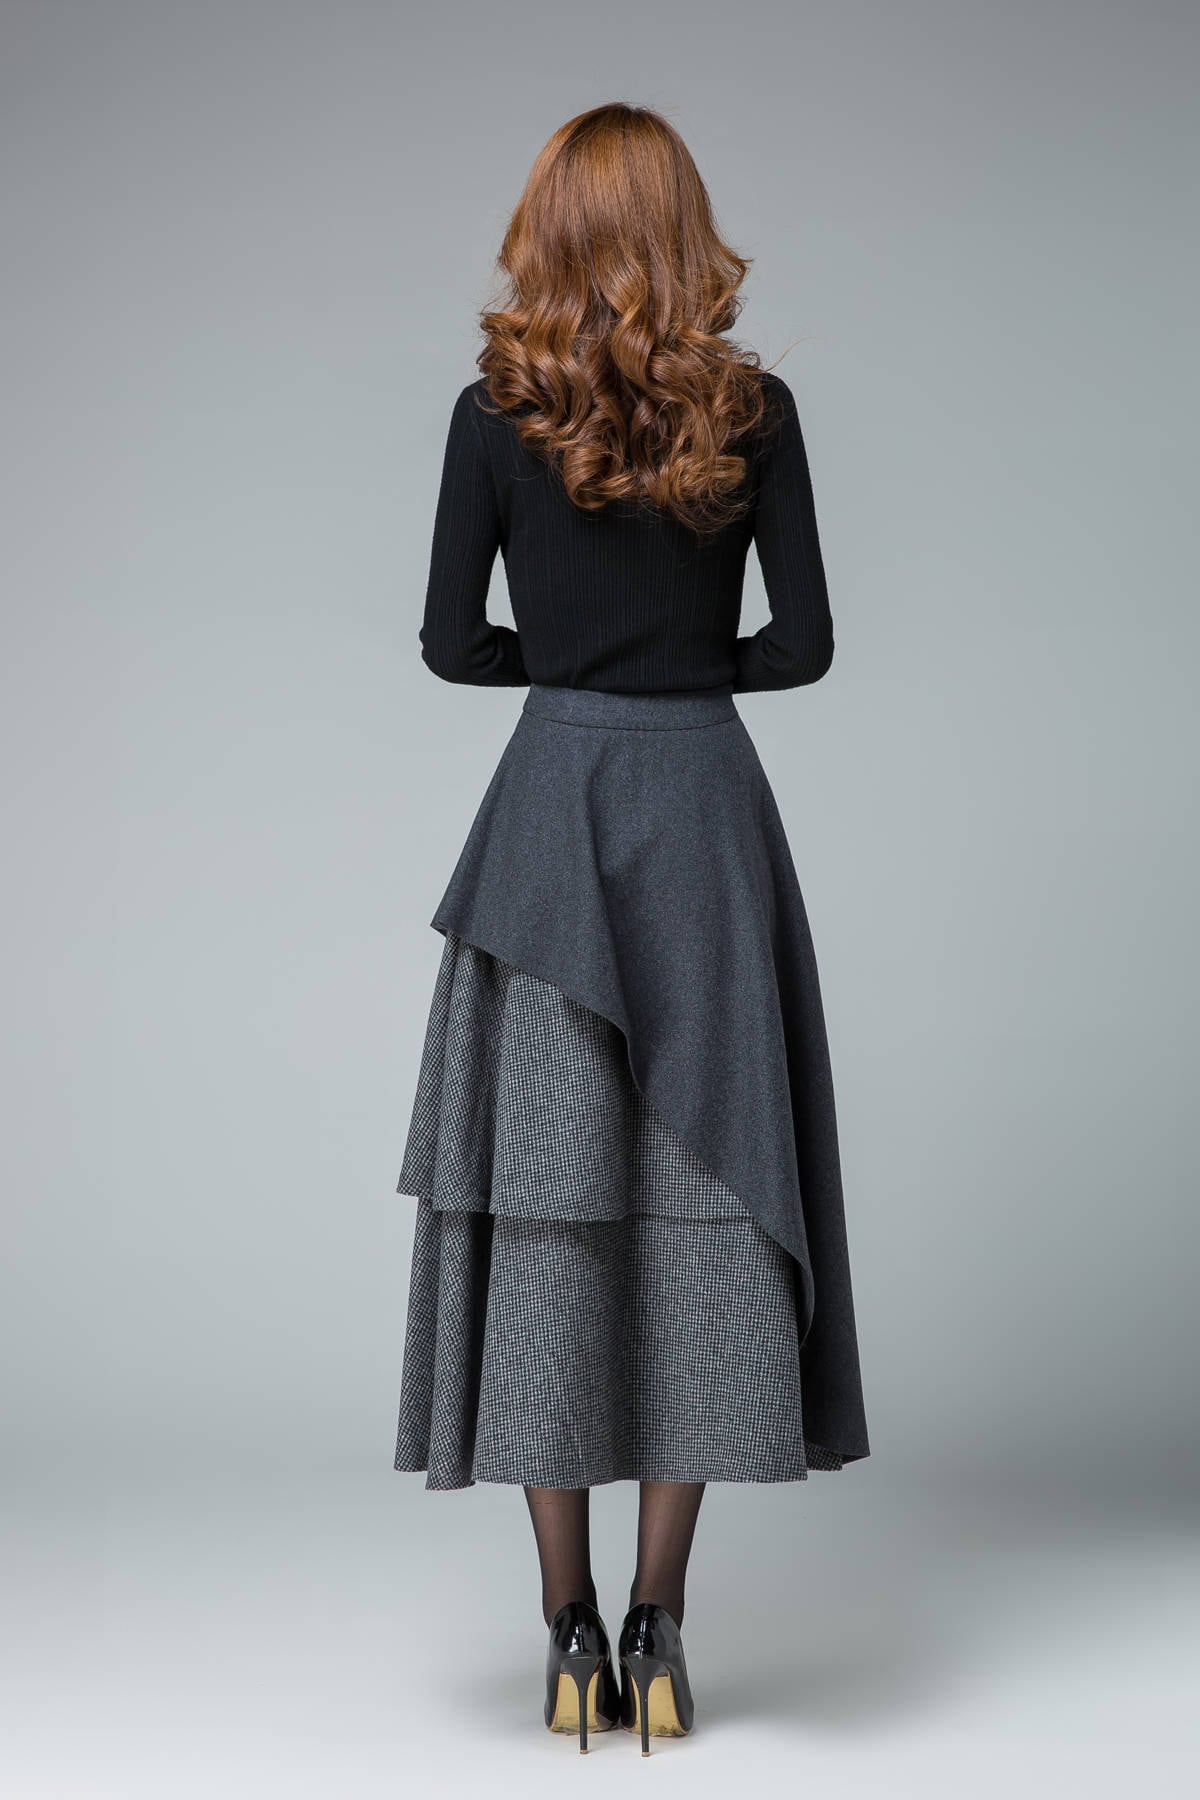 Gray Wool Skirt Maxi Winter Skirt Layered Skirt High | Etsy UK